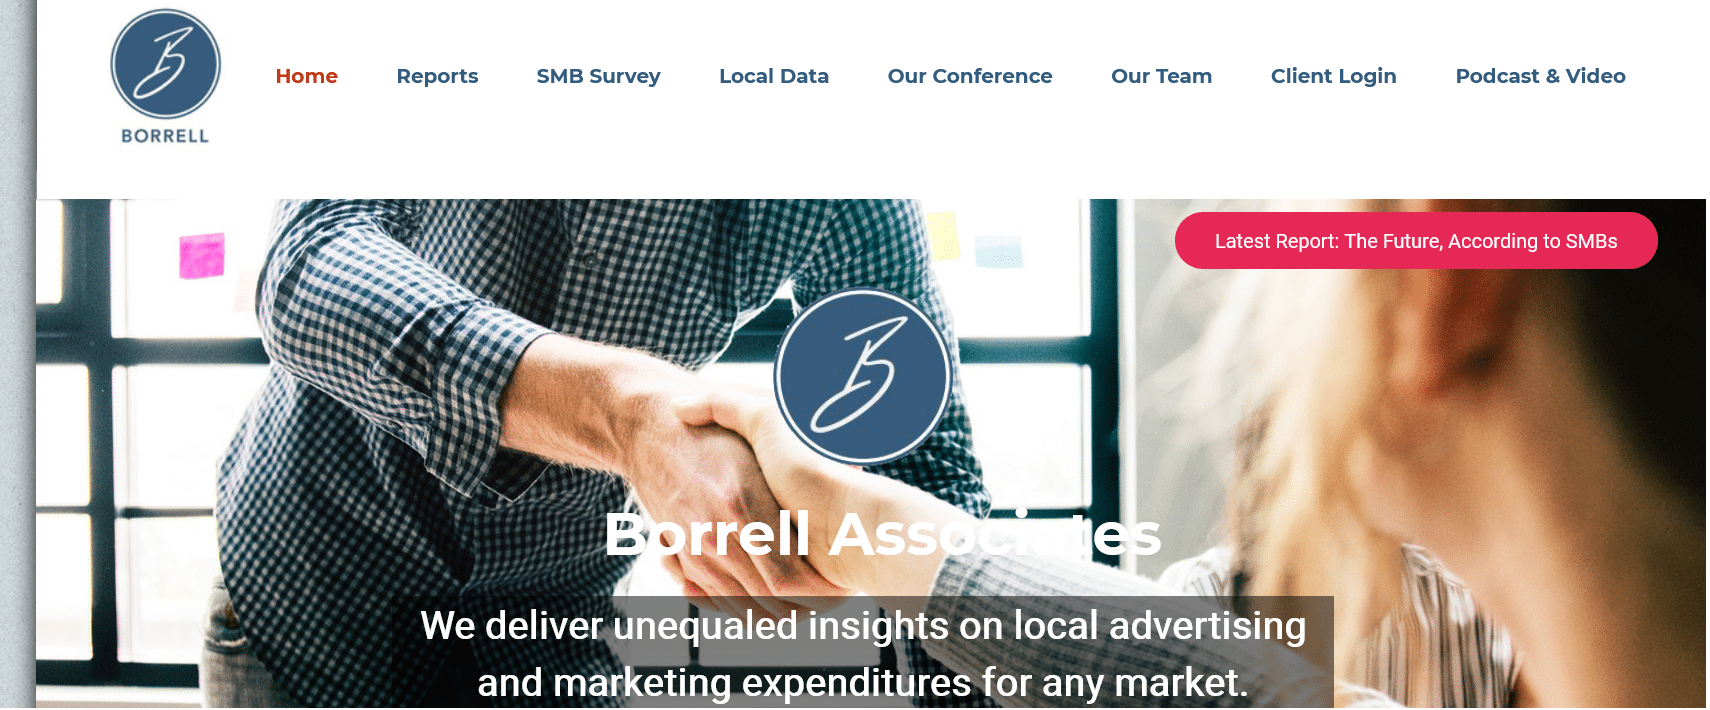 Borrell Associates